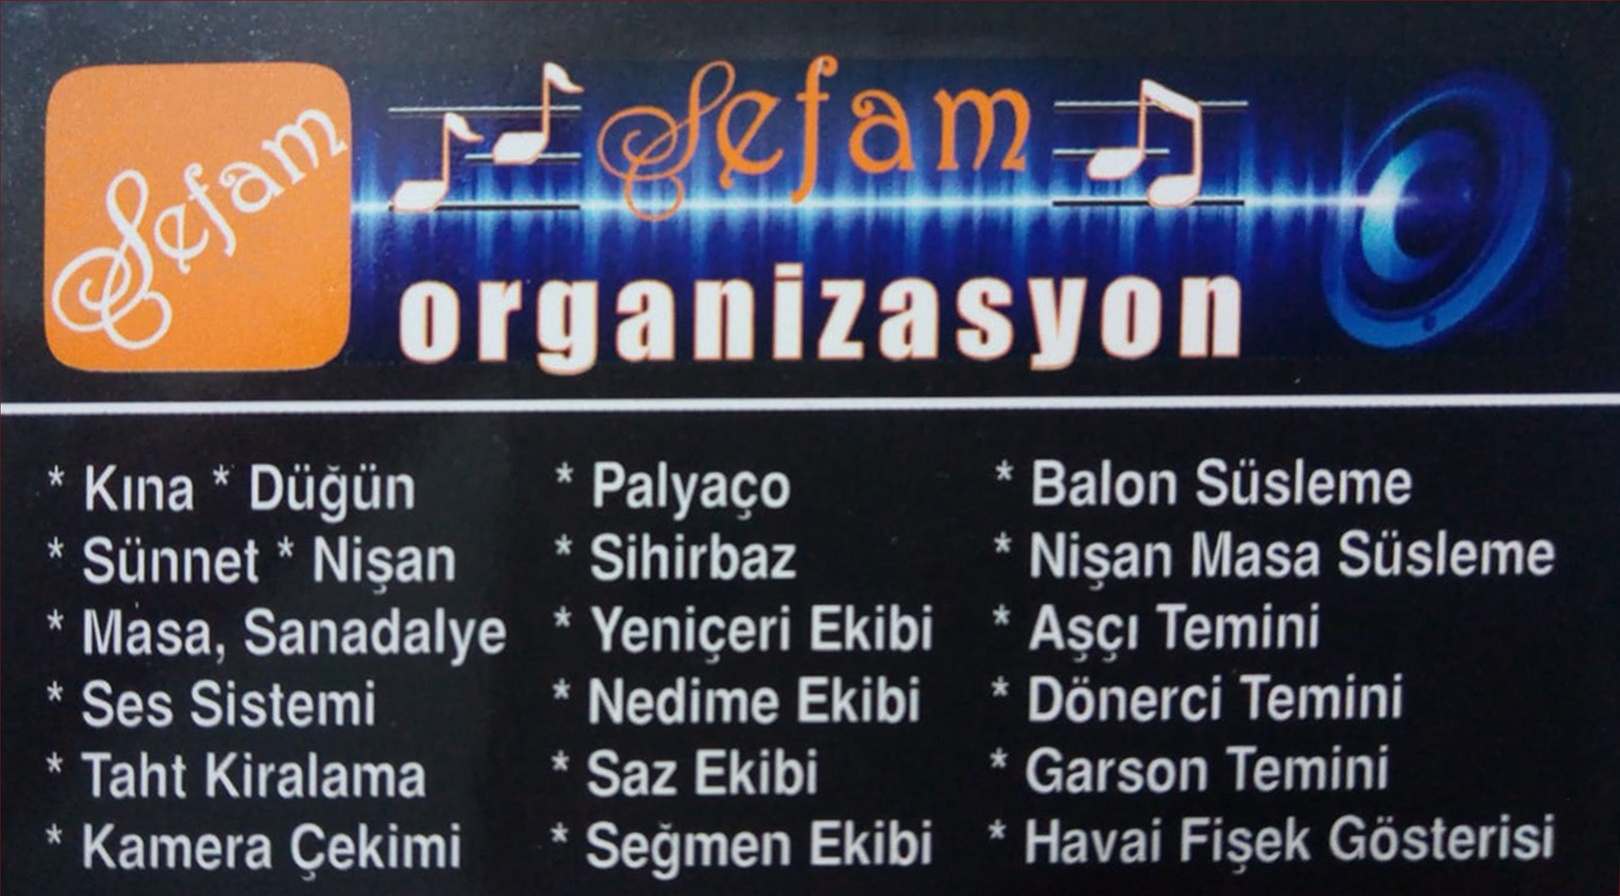 Ankara Keçiören Sefam Organizasyon Ankara 0536 474 94 46 - 0552 474 94 46